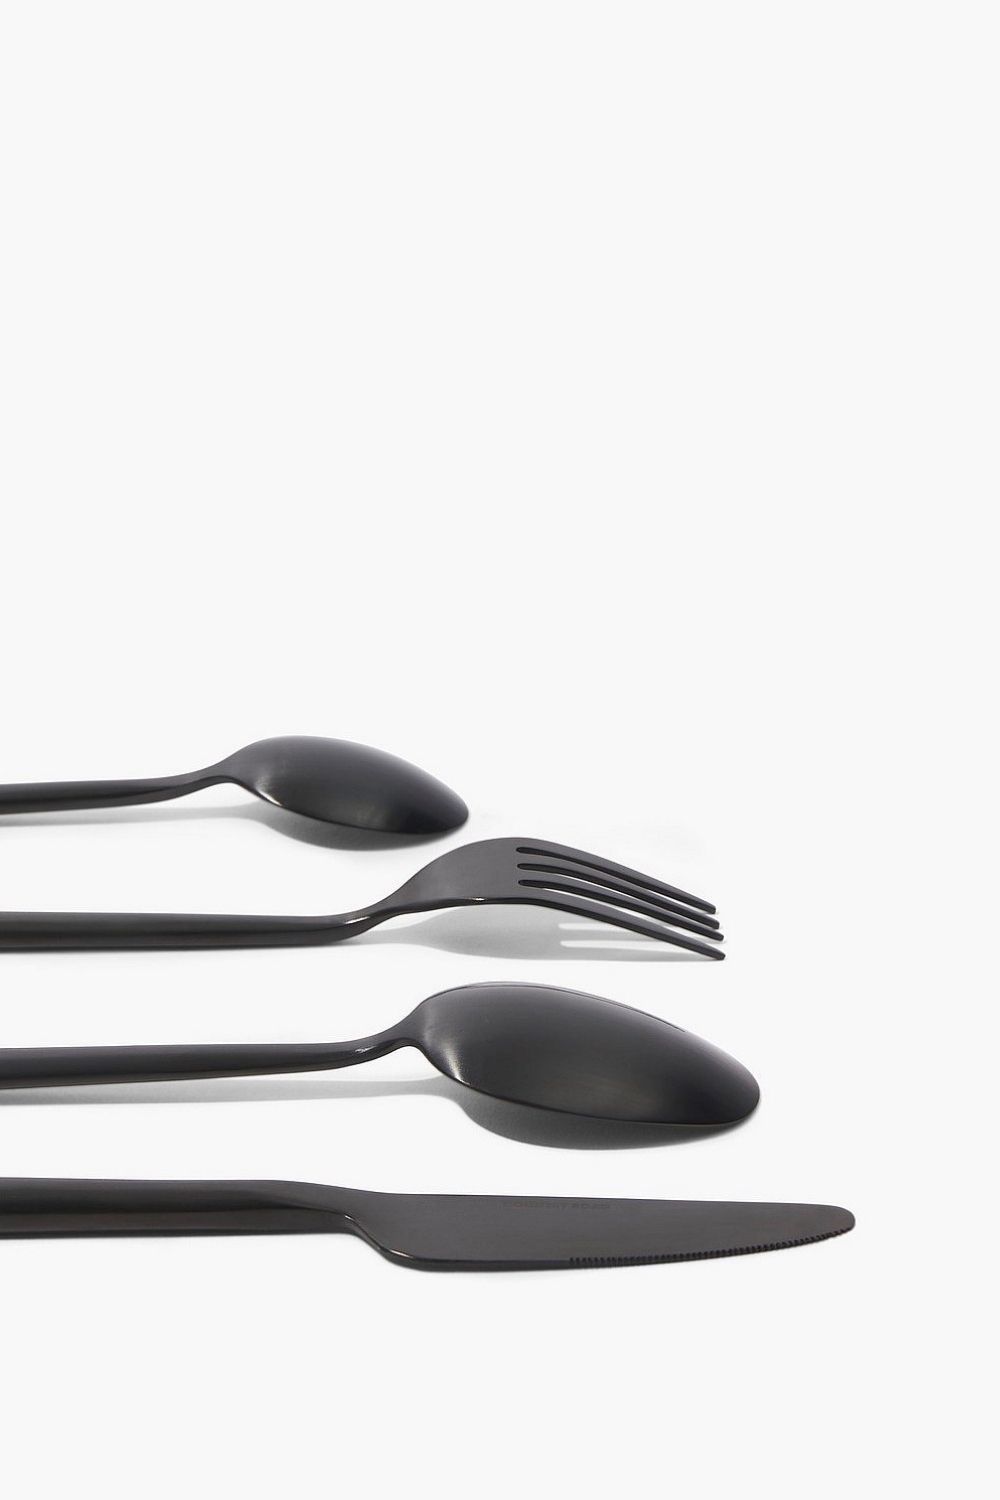 cutlery-matte-black